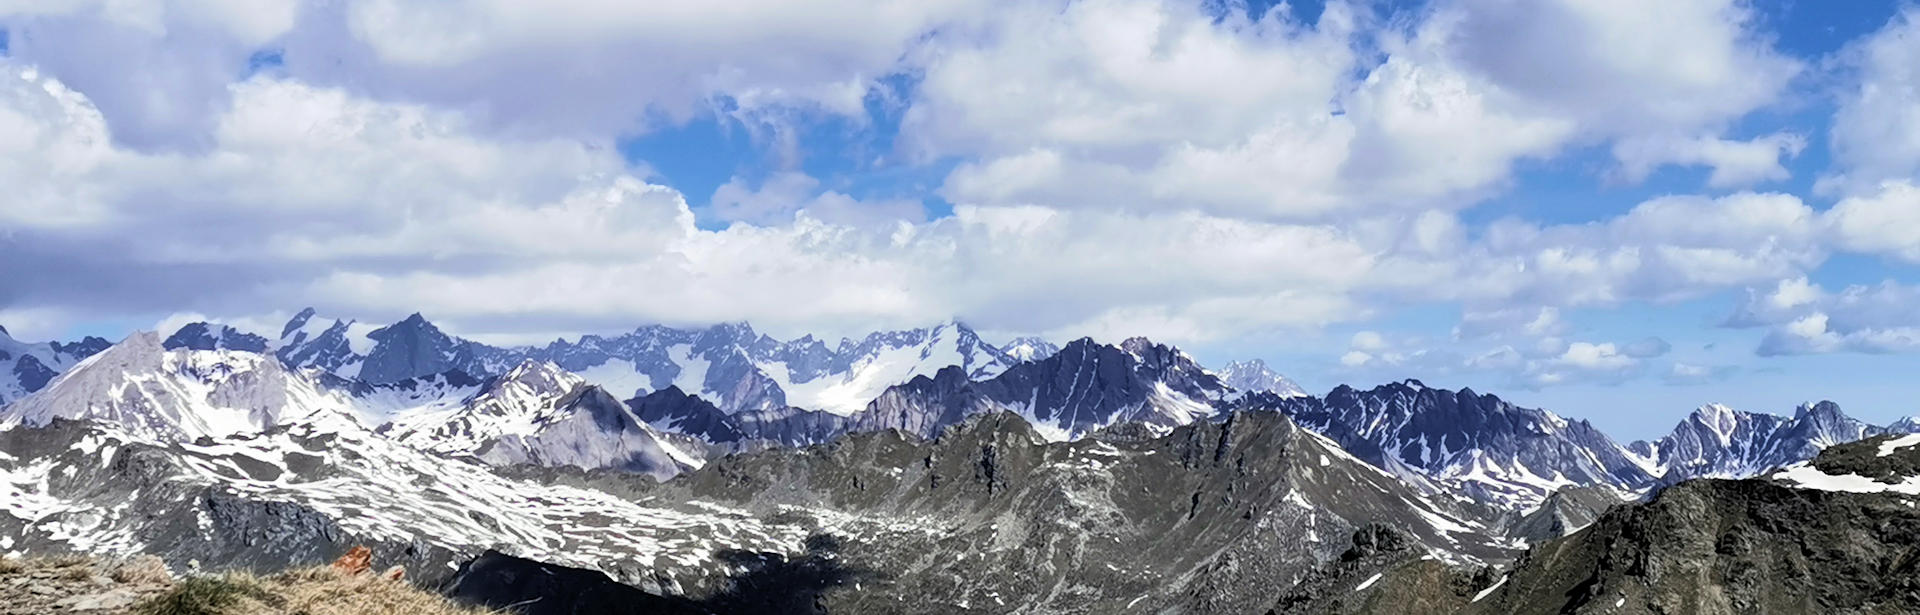 Punta Leysser - Valle d'Aosta